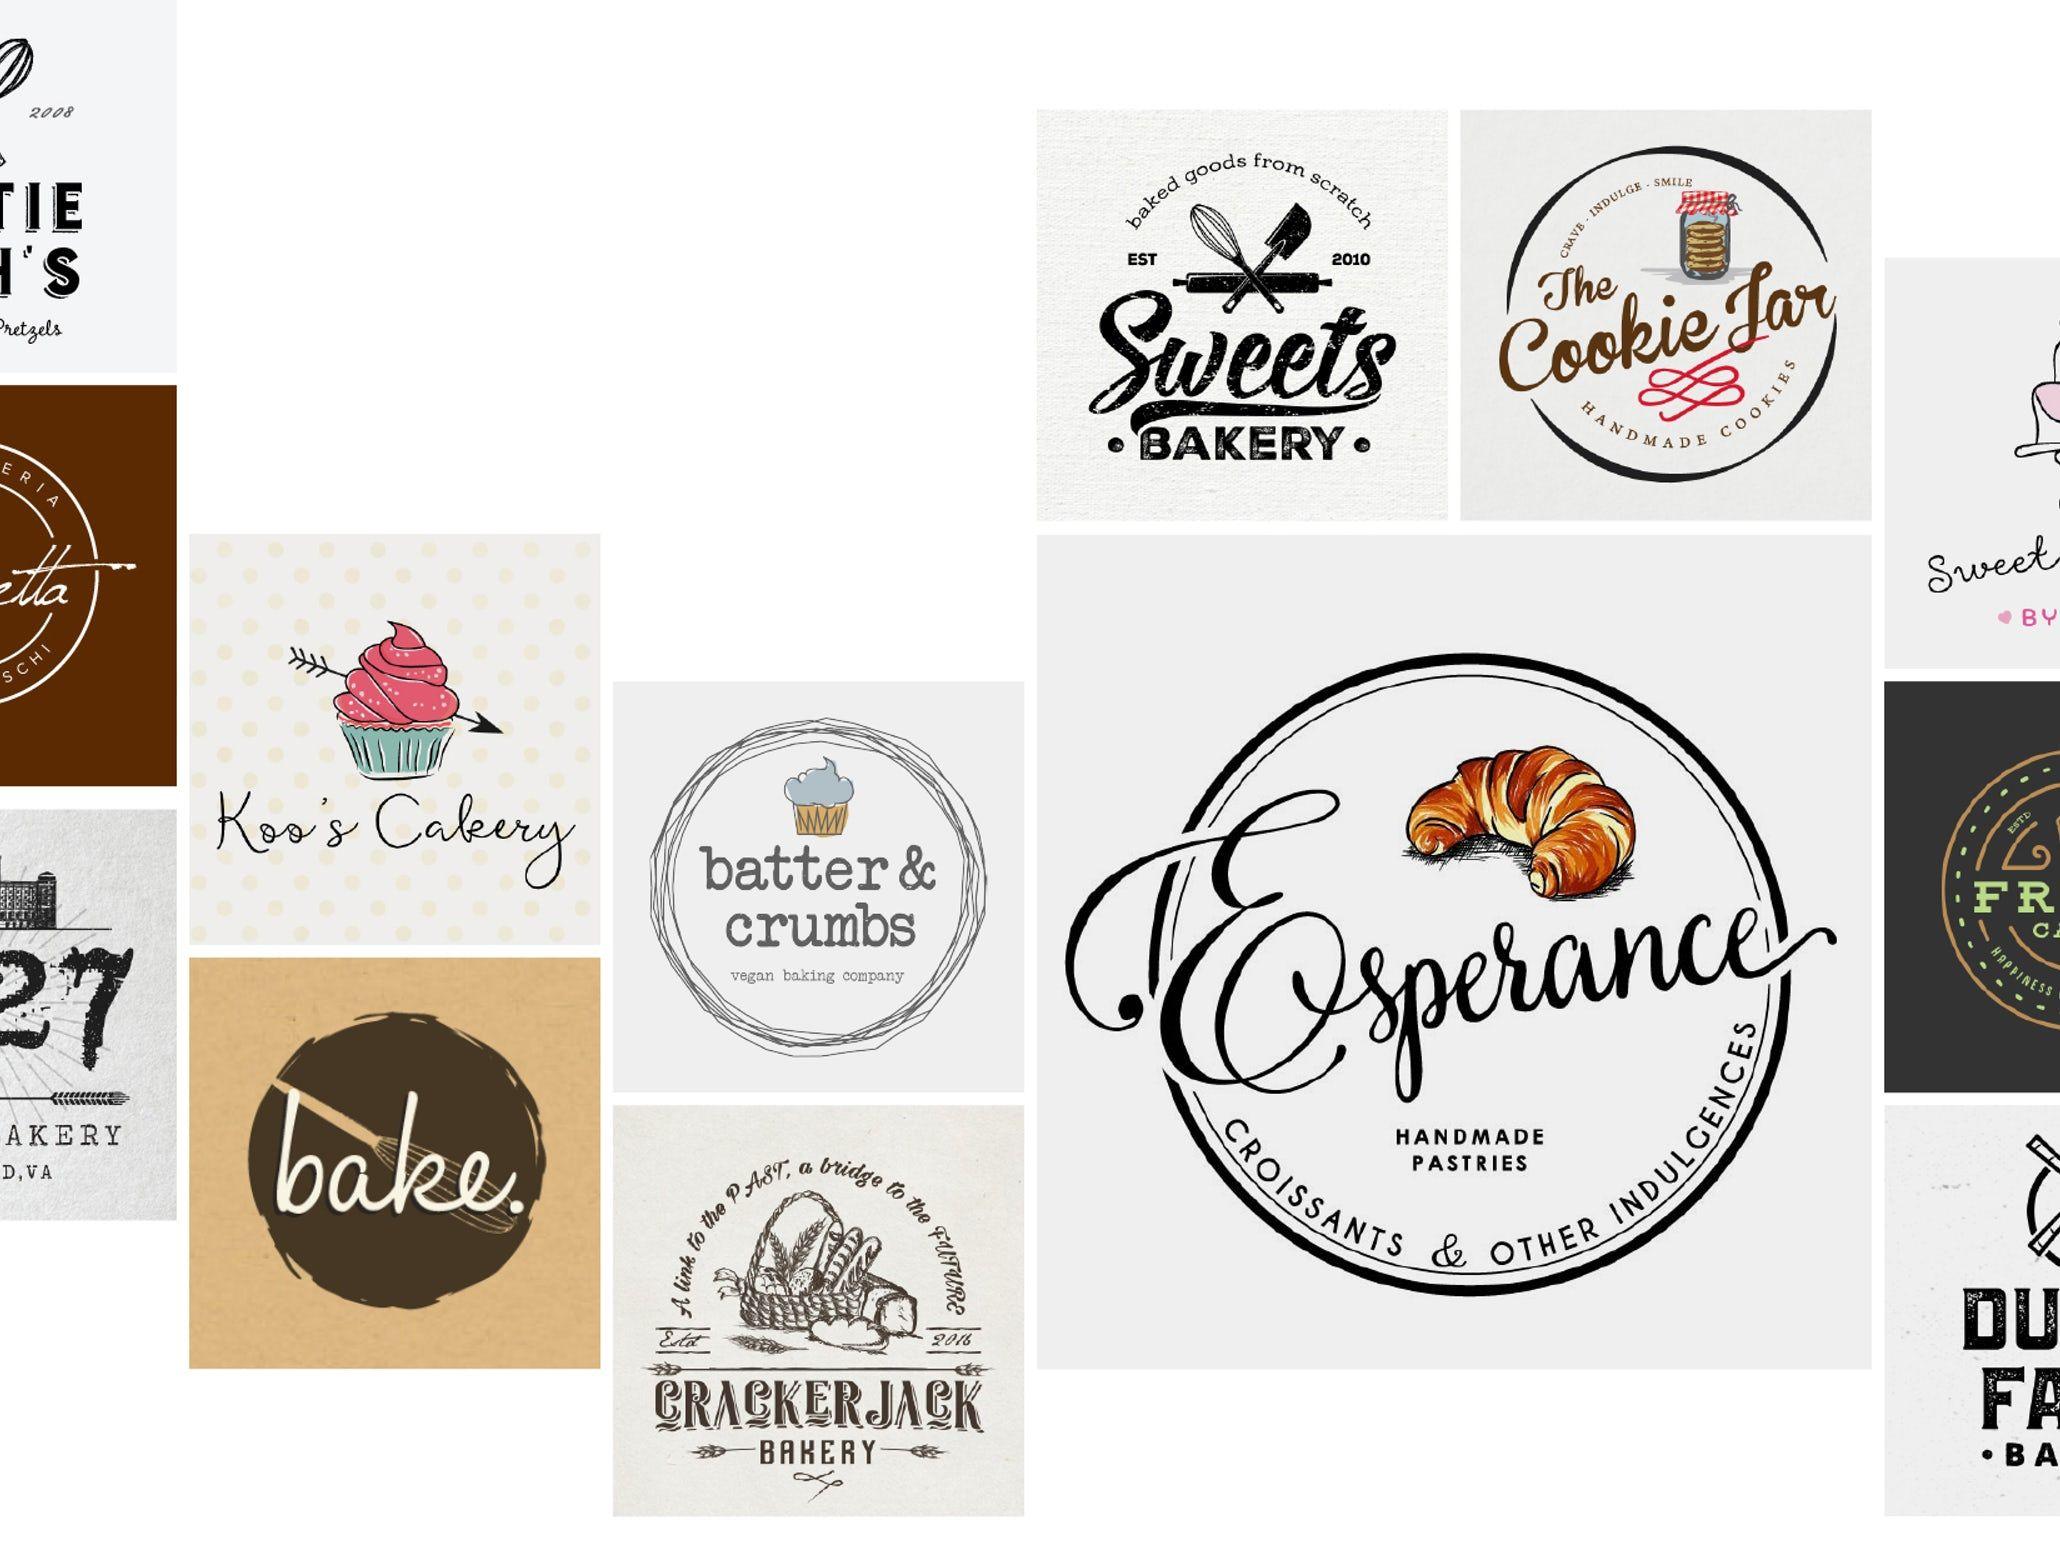 Backery Logo - bakery logos that are totally sweet